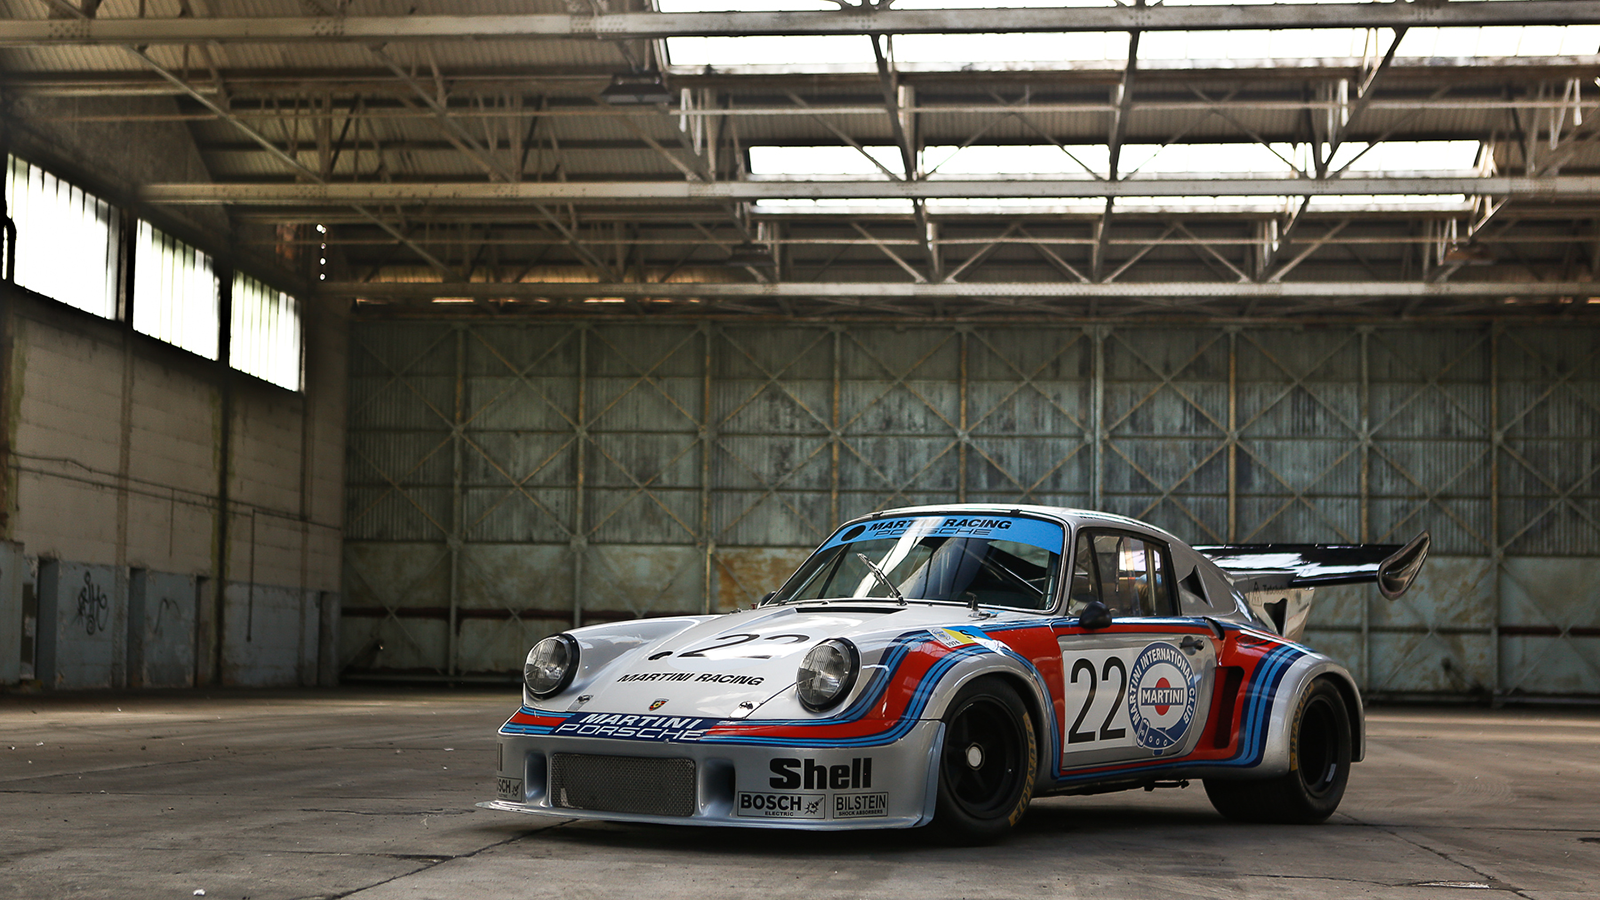 Le Mans podium Porsche 911 Carrera RSR Turbo for sale at Goodings Amelia Island auction